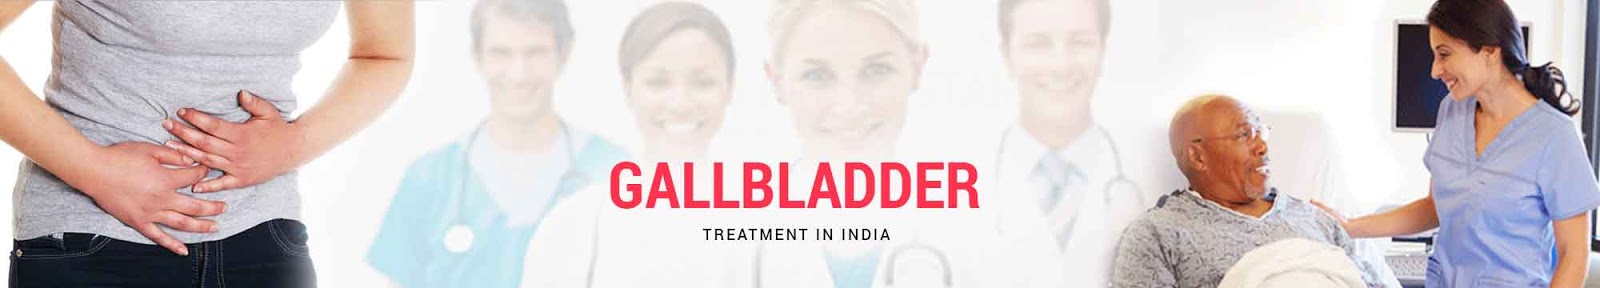 Gallbladder Cancer Treatment  India